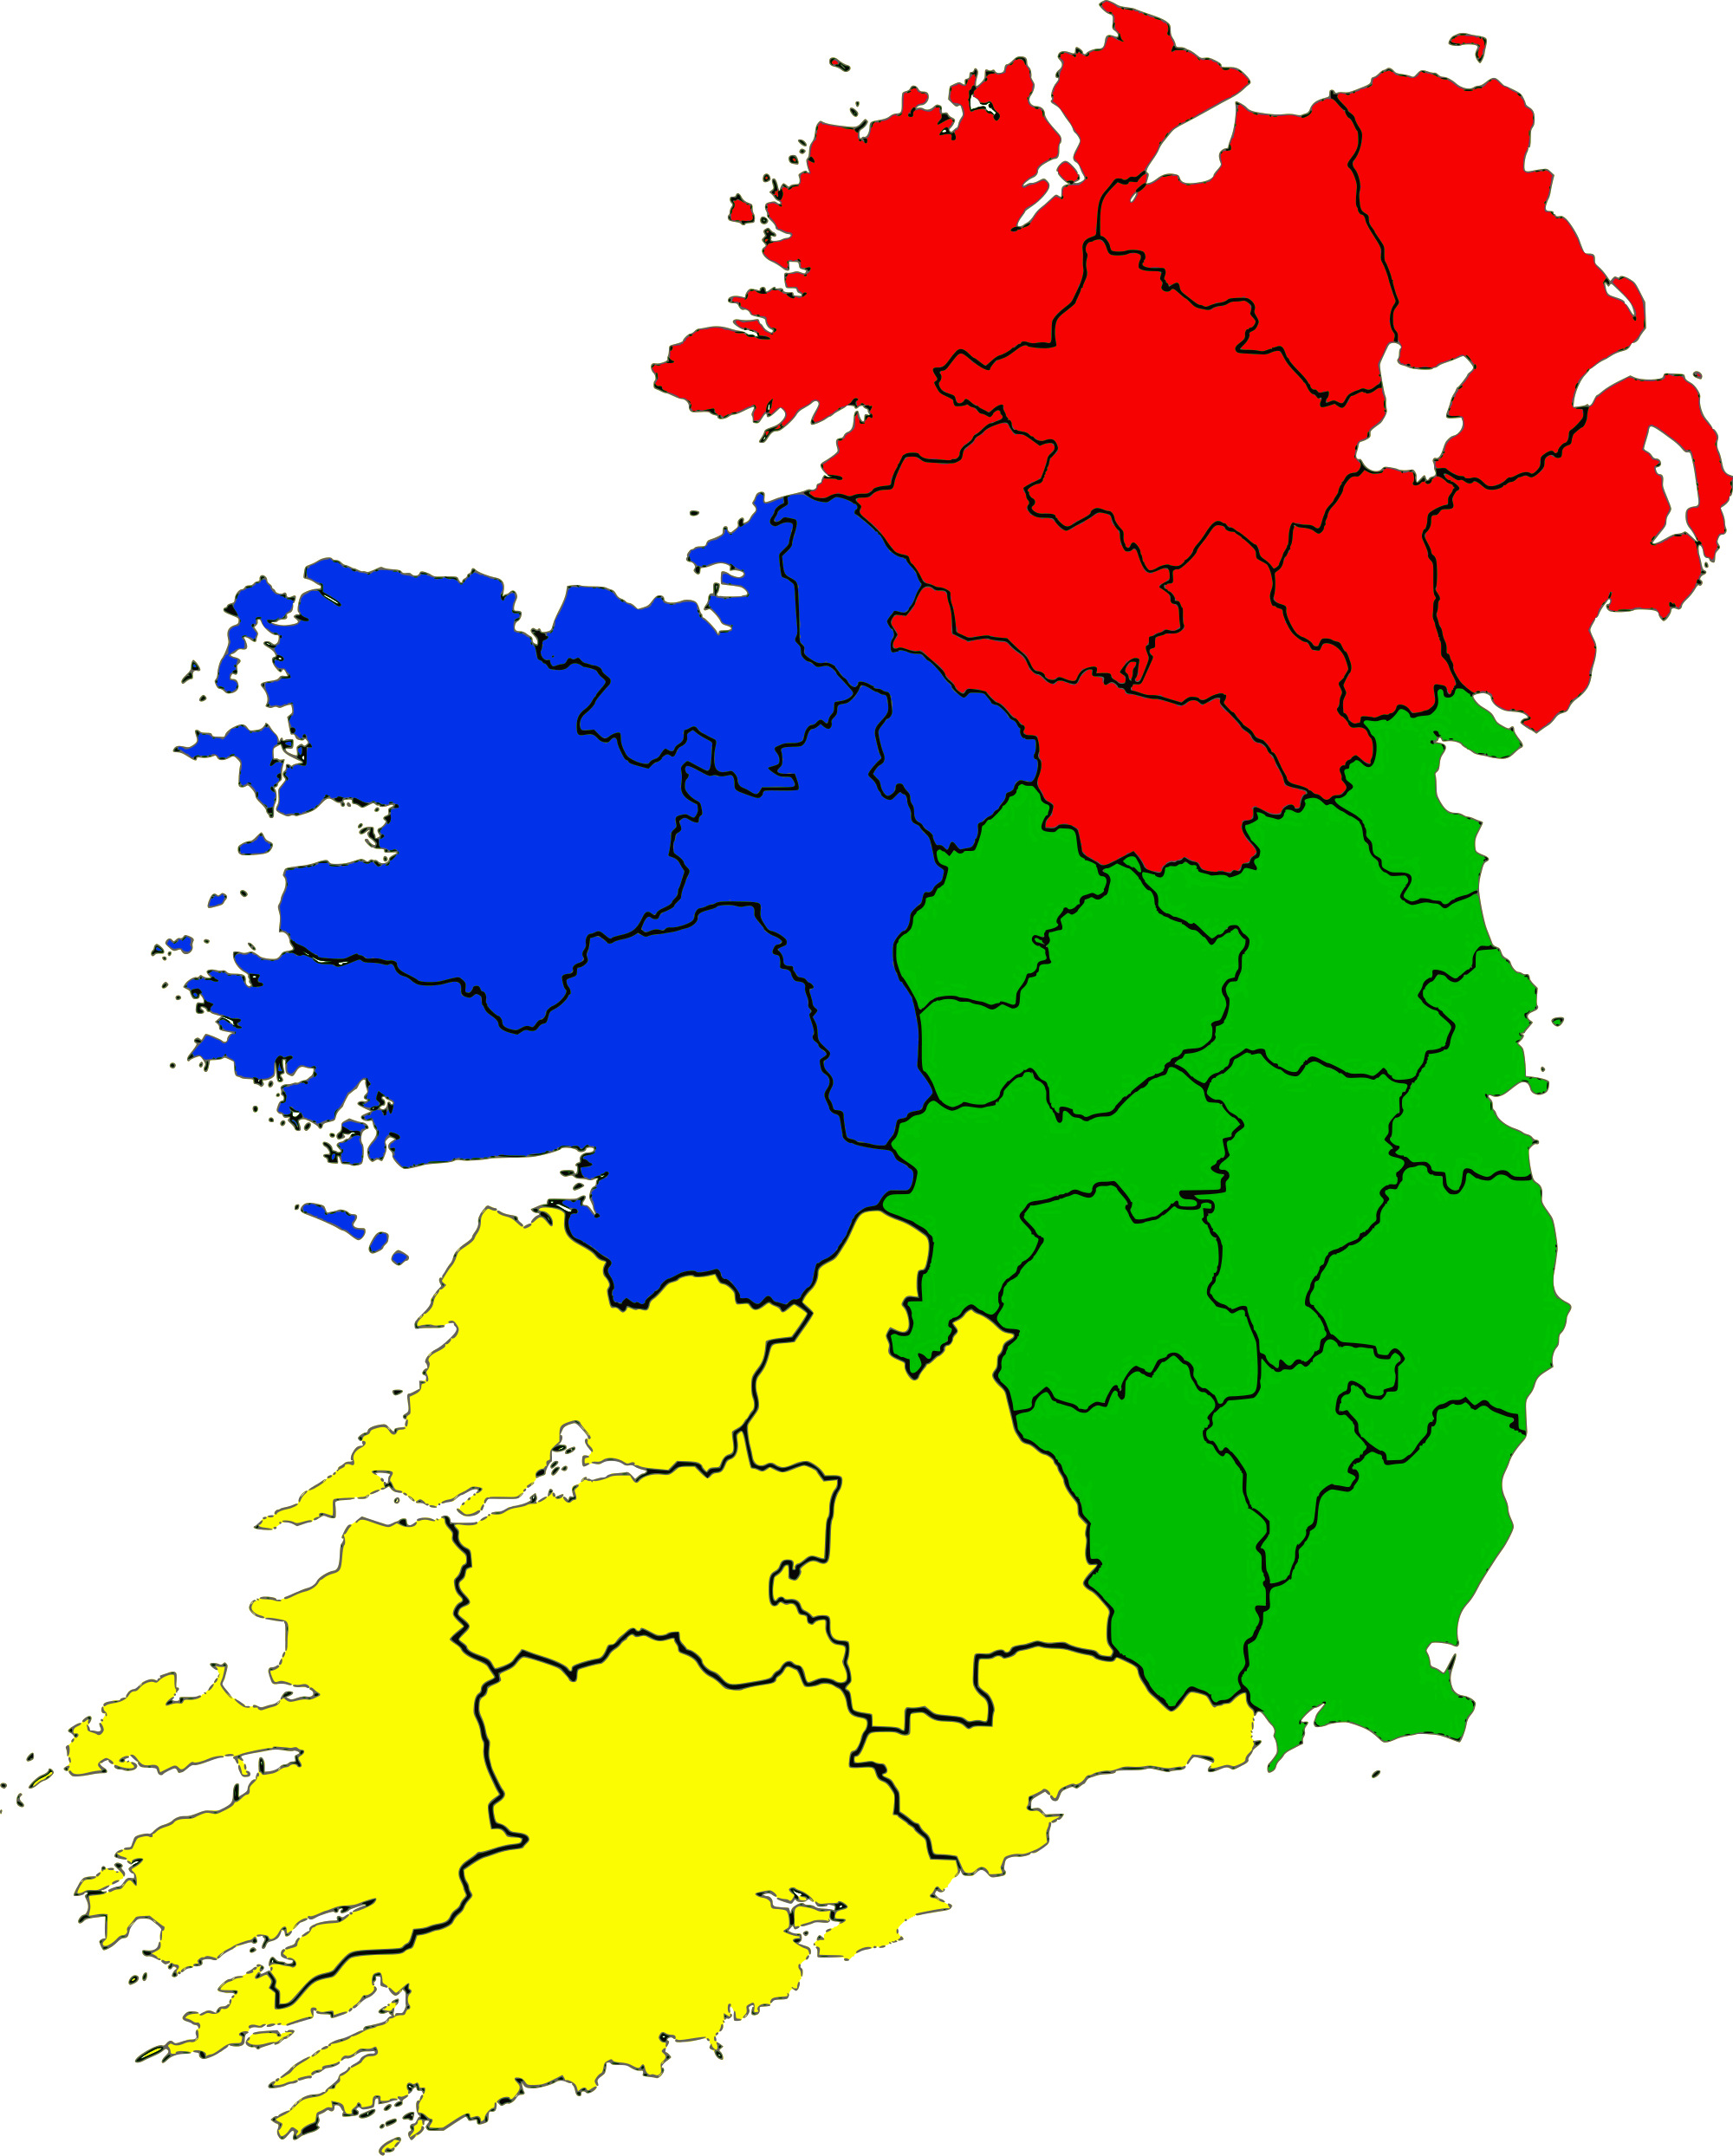 Provinces of Ireland - Wikipedia, the free encyclopedia